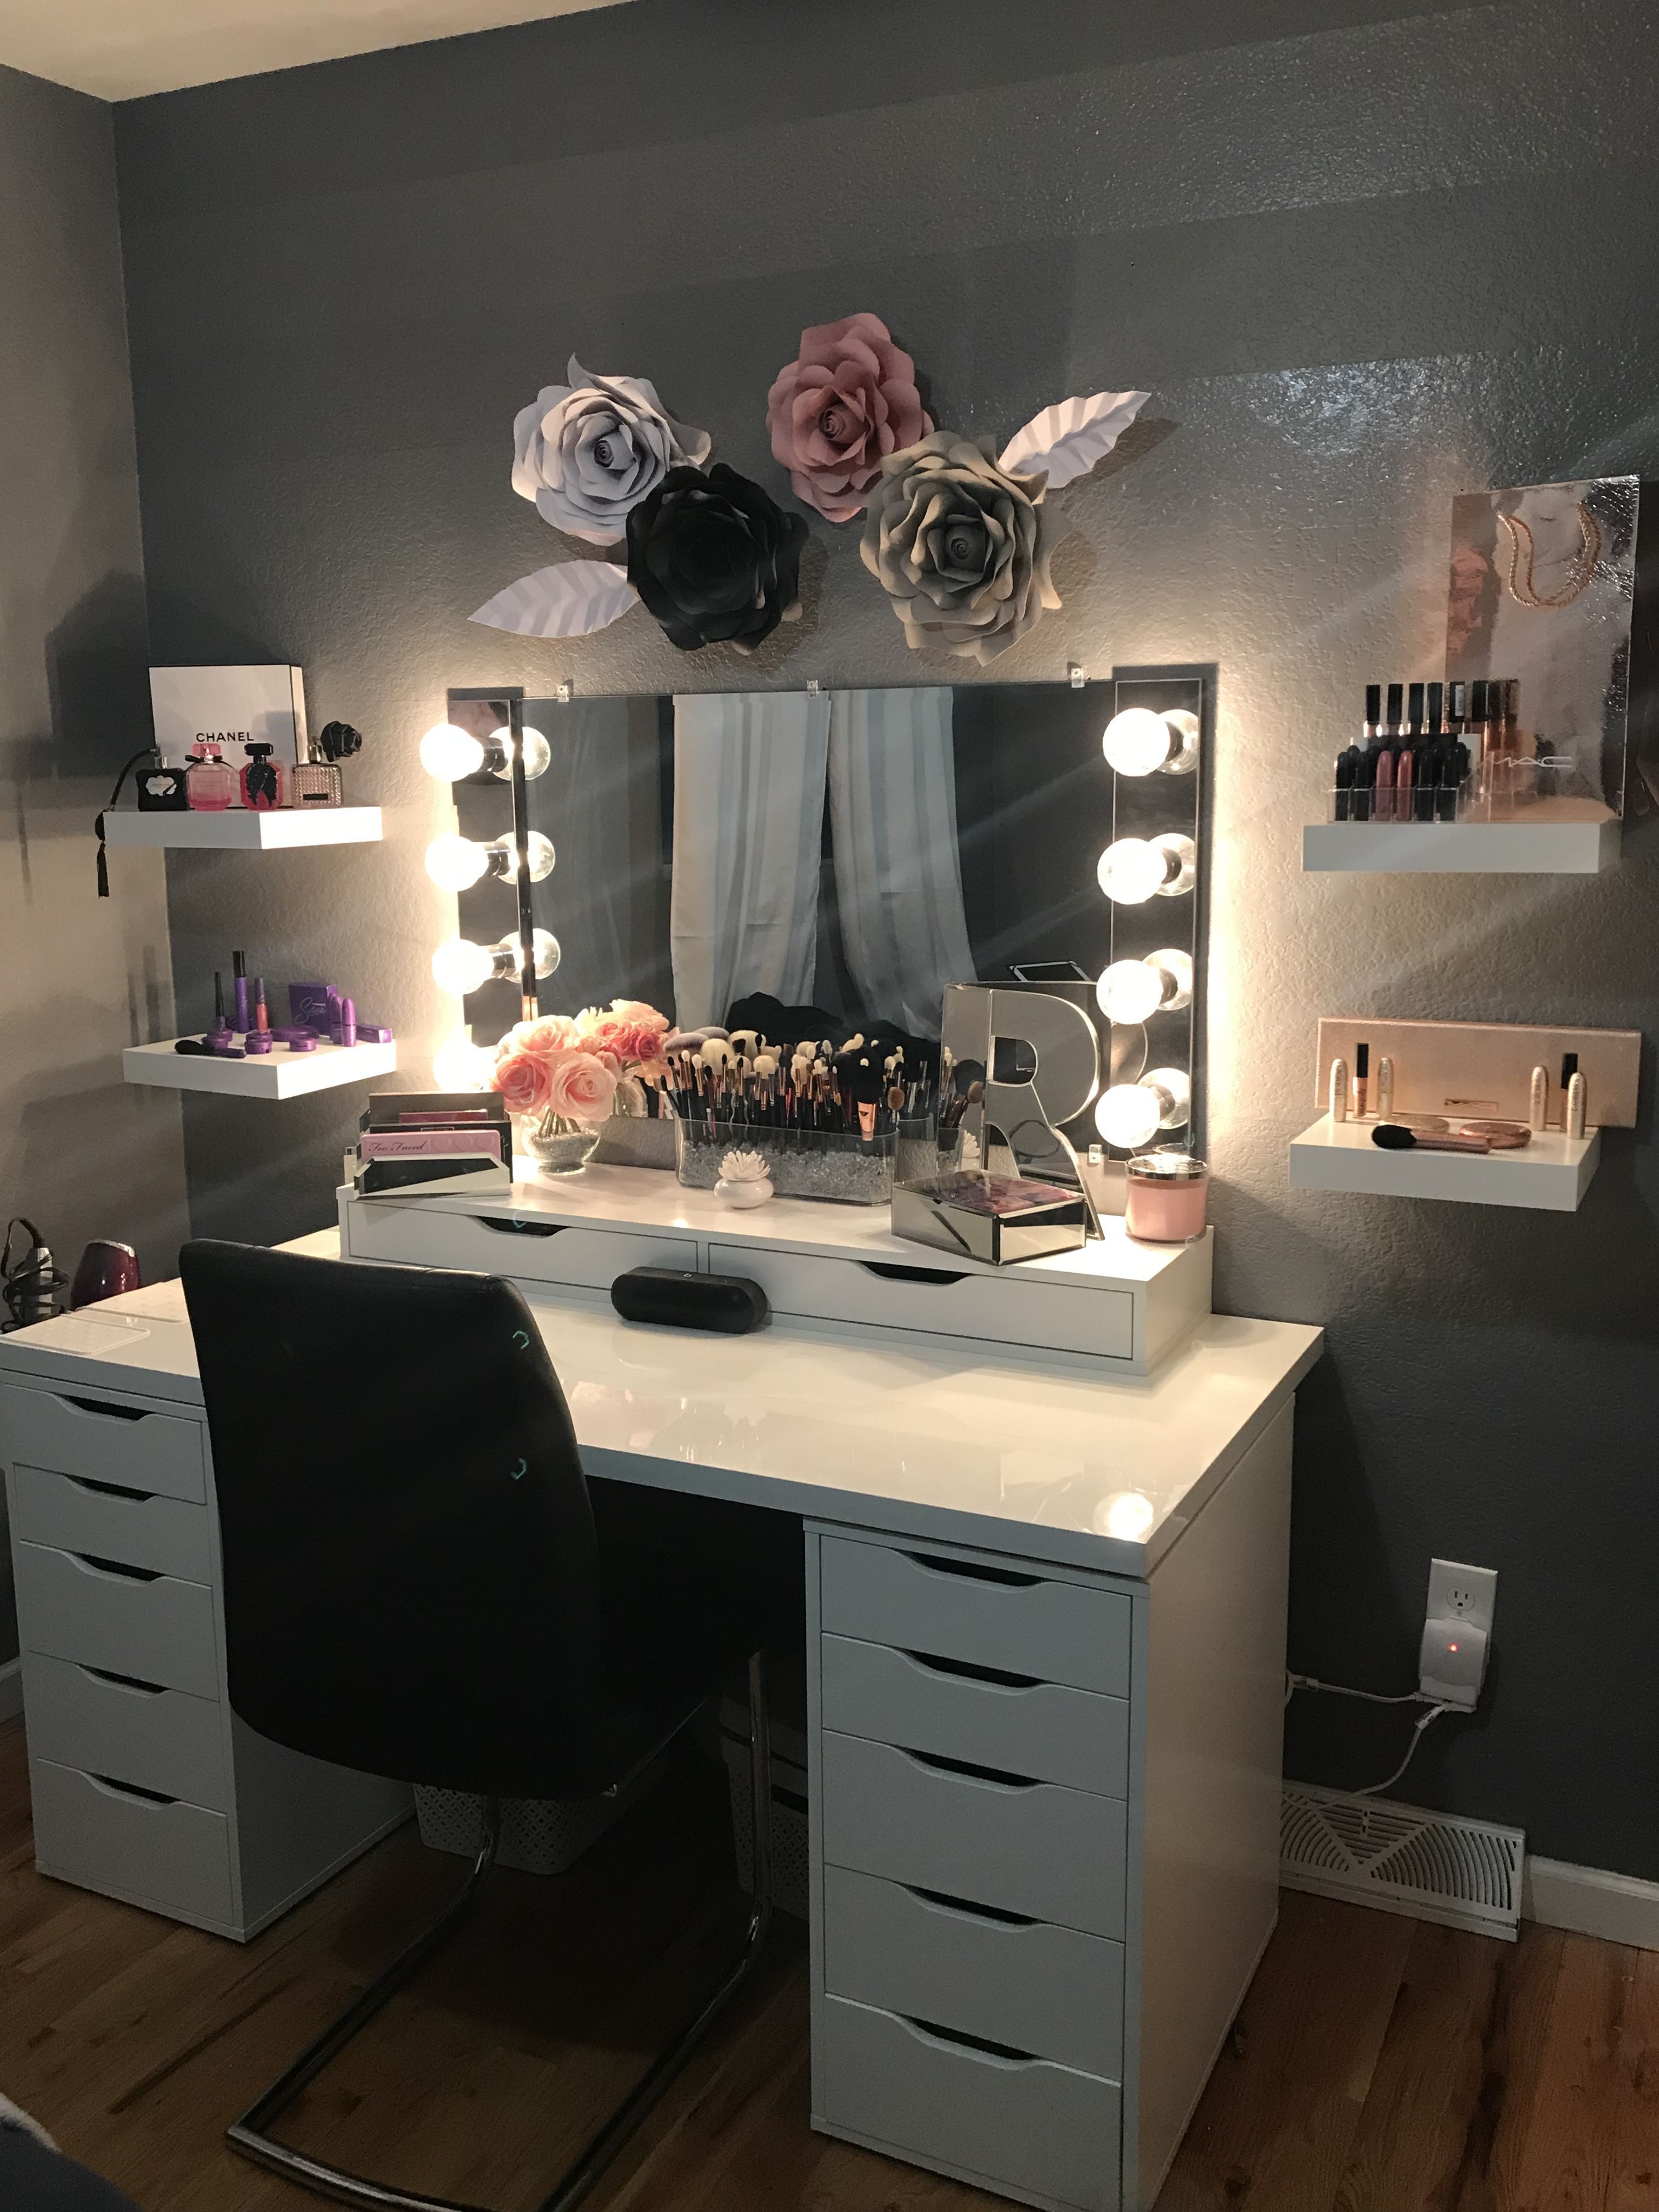 13 Beautiful Makeup Room Ideas, Organizer and Decorating - 13 Beautiful Makeup Room Ideas, Organizer and Decorating -   15 beauty Room wood ideas